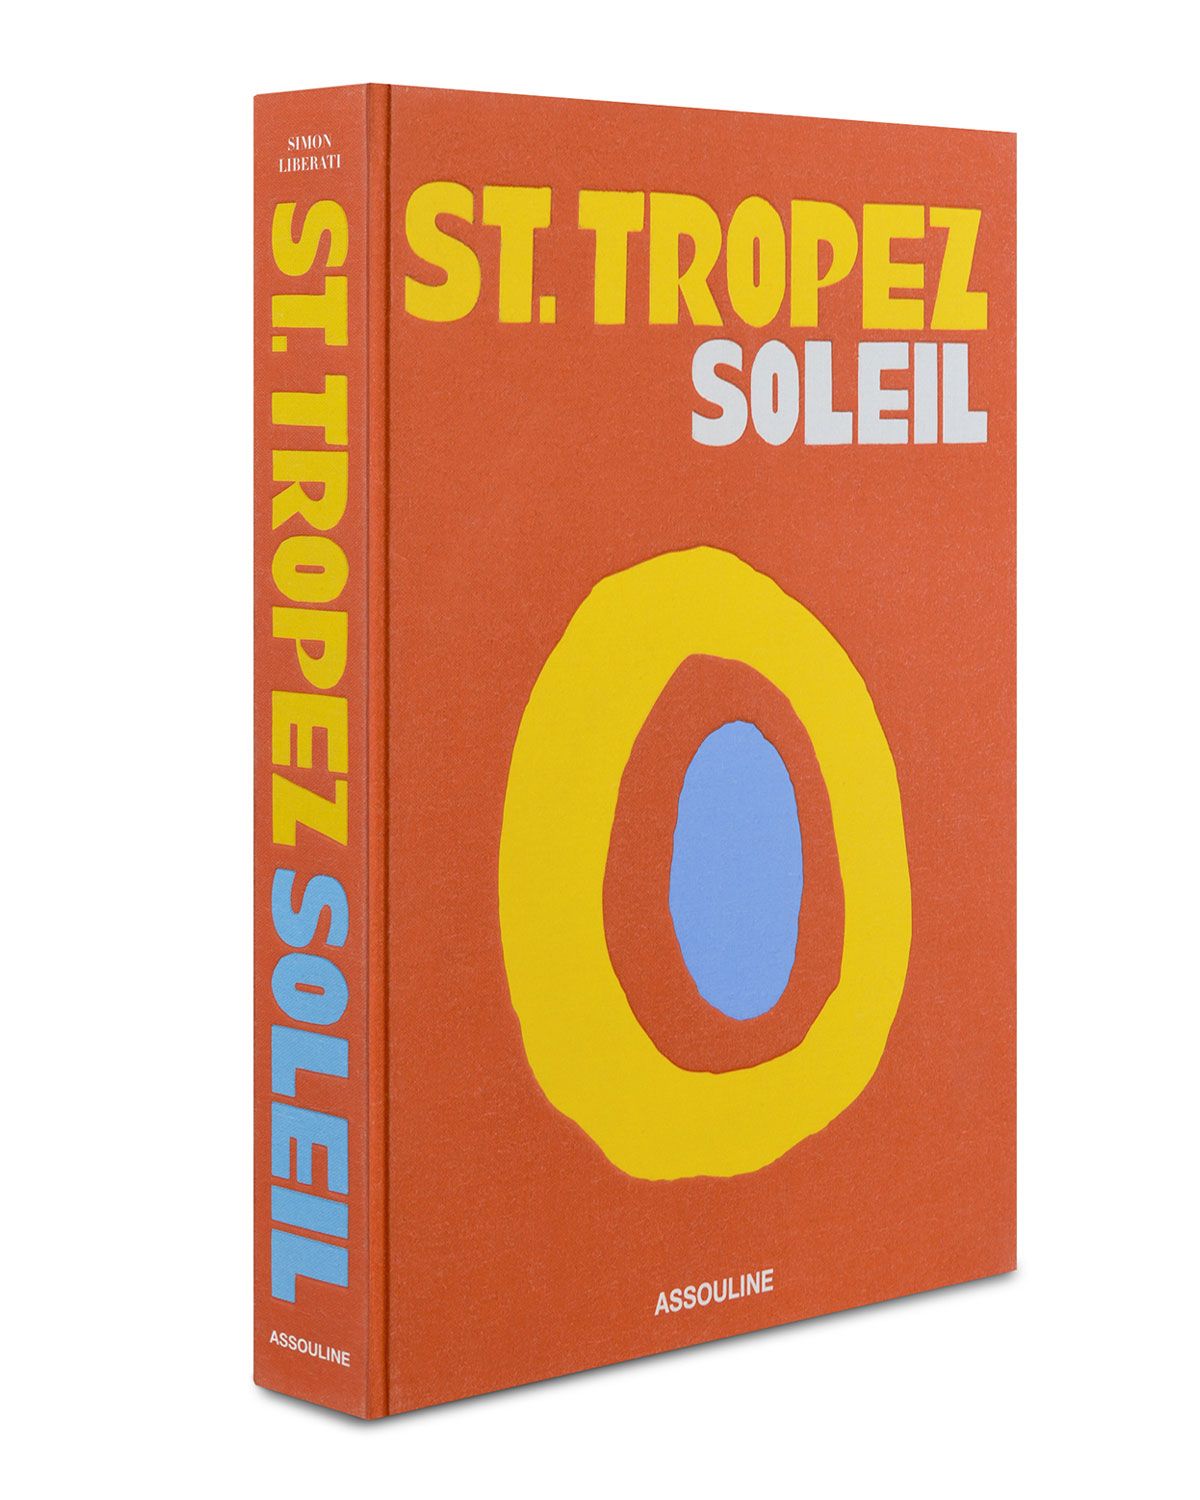 St. Tropez Soleil" Book | Neiman Marcus